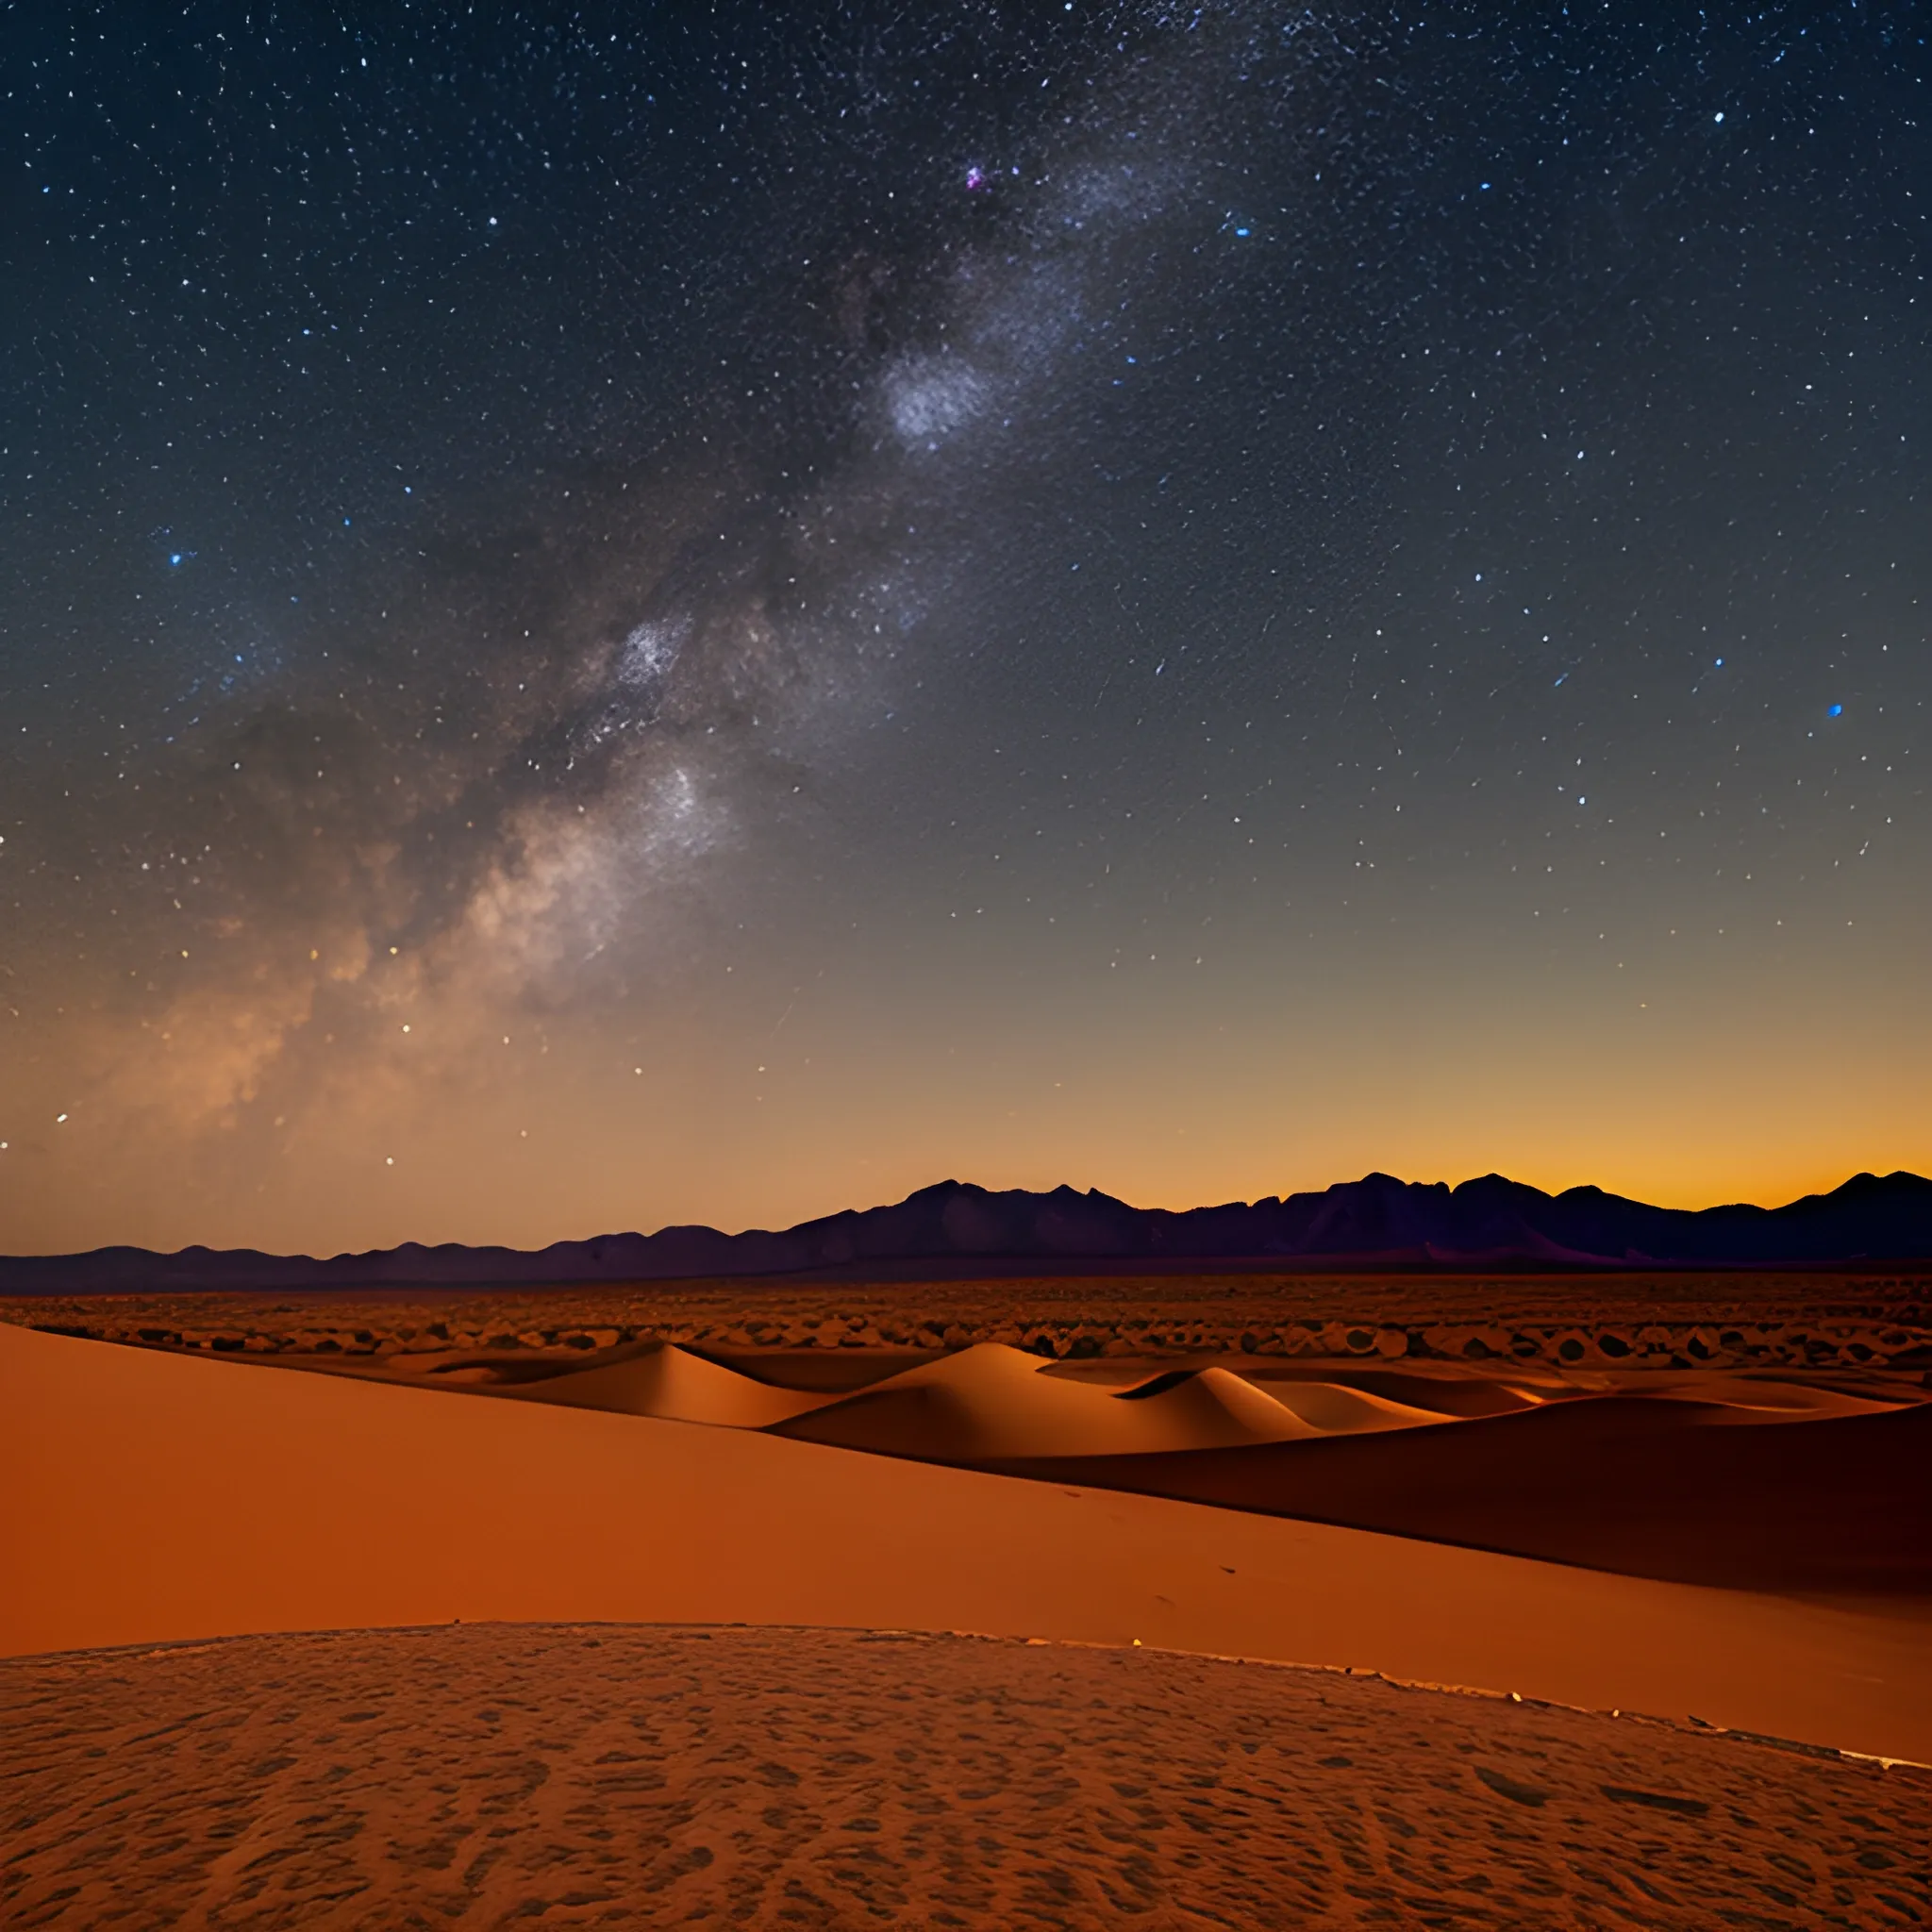 Desert sky at night